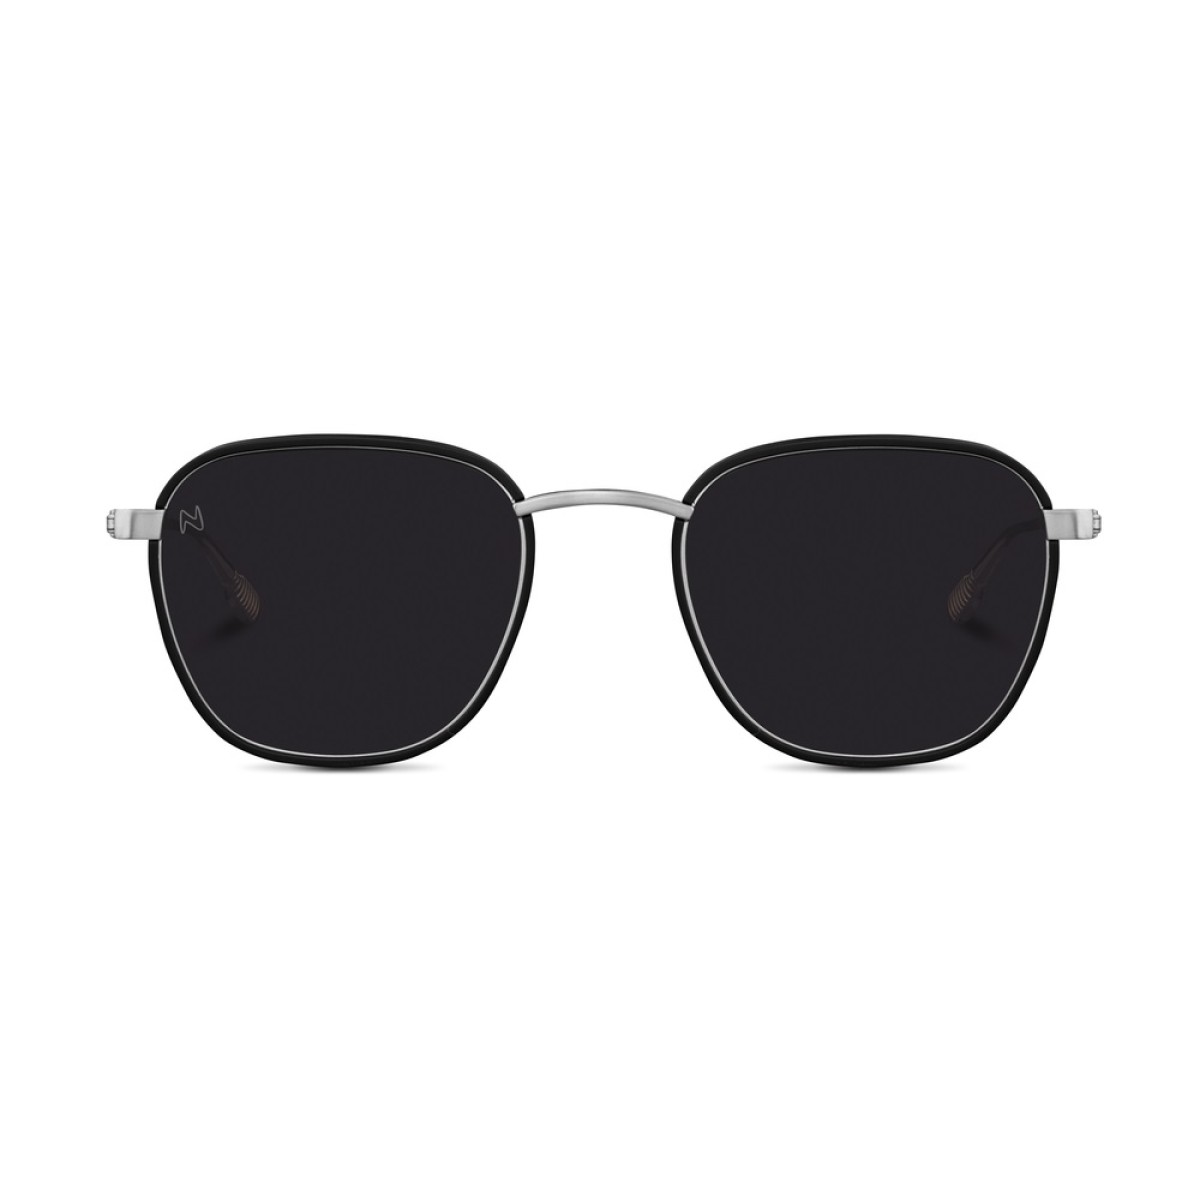 Nooz - Dual Sunglasses - Hiro - Black